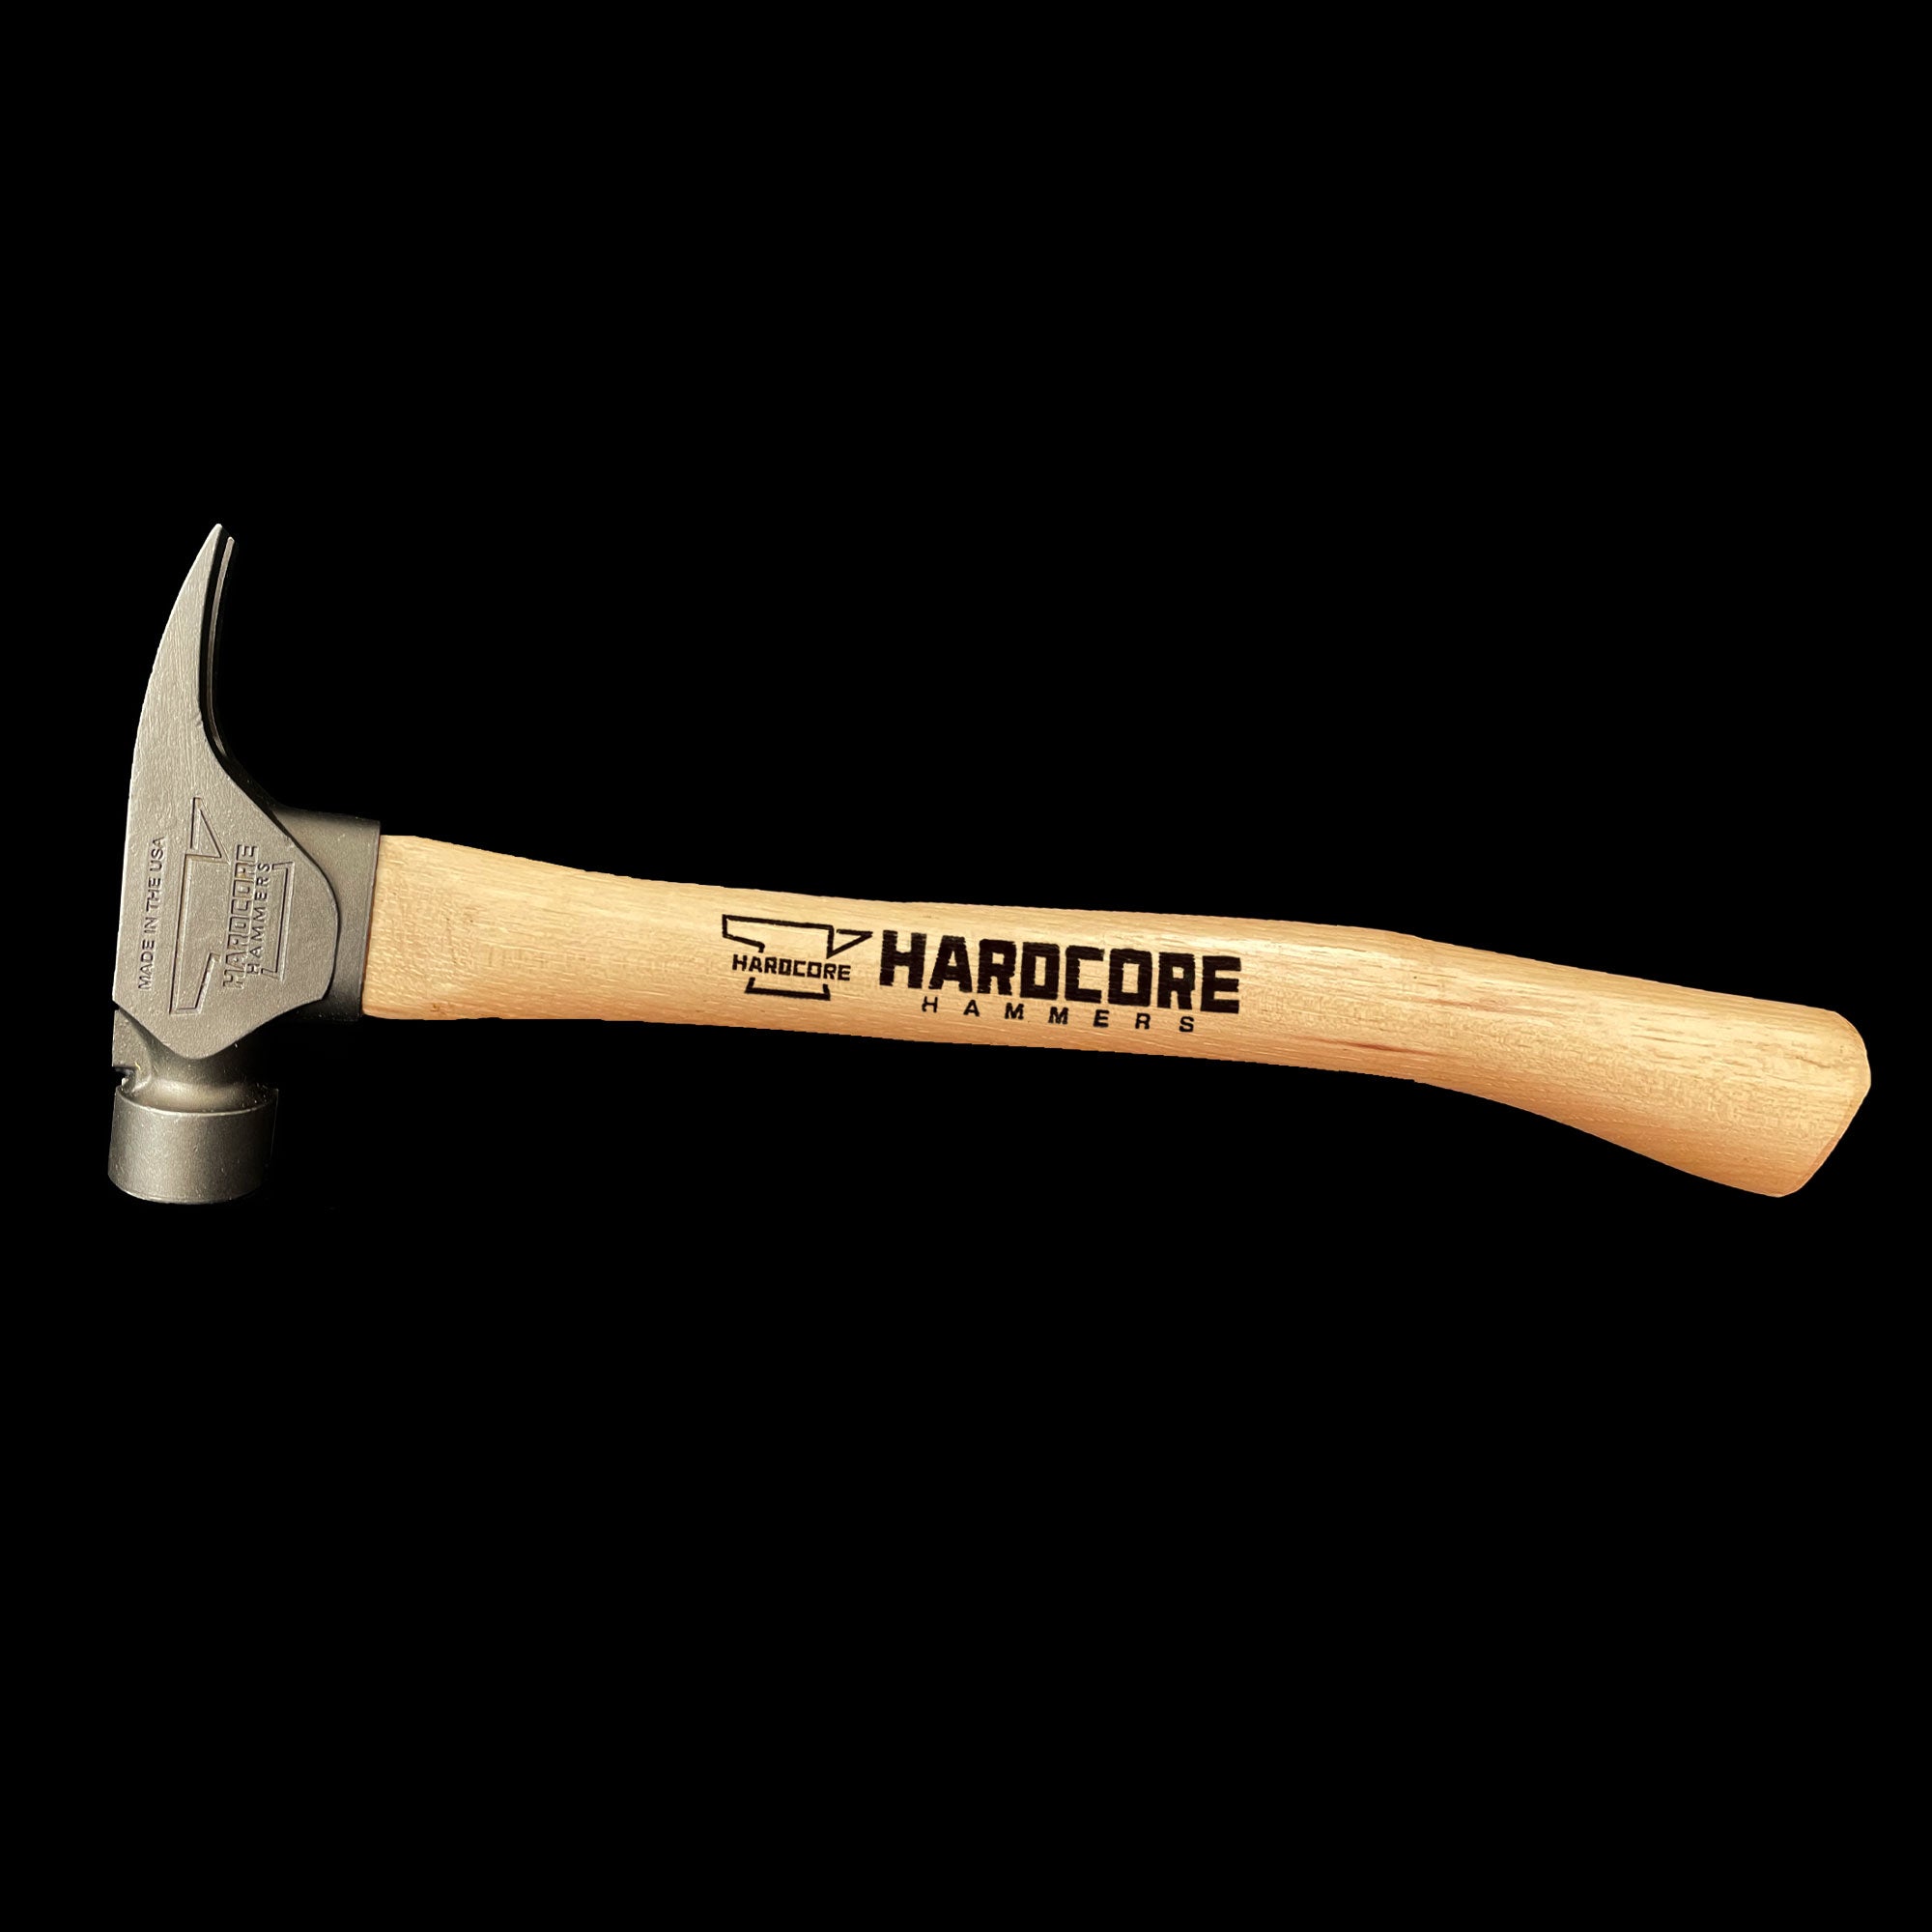 Hardcore Hammer 2.0 – Hardcore Hammers